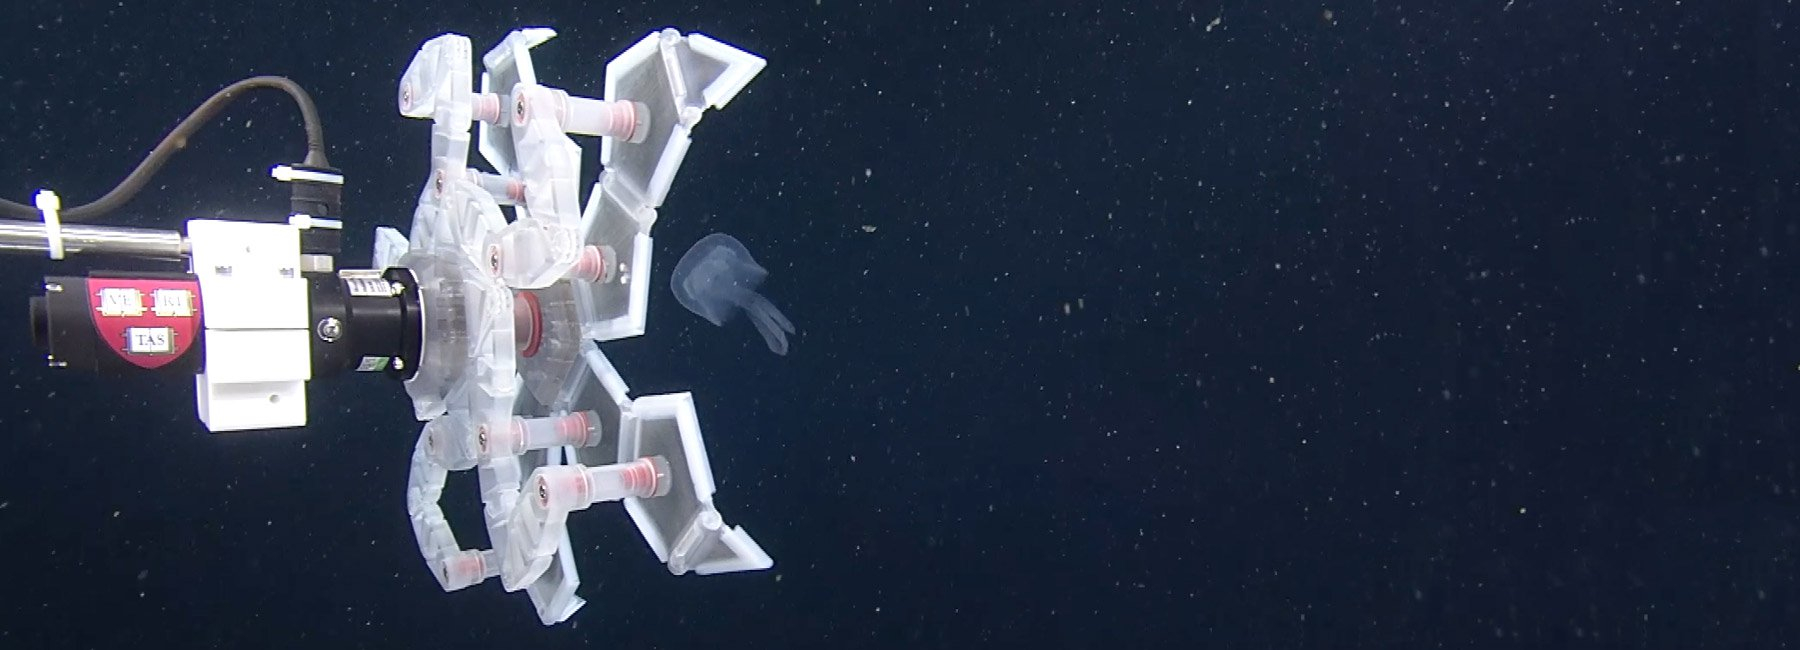 Origami Sea Creatures This 3d Printed Origami Robot Captures Delicate Sea Creatures